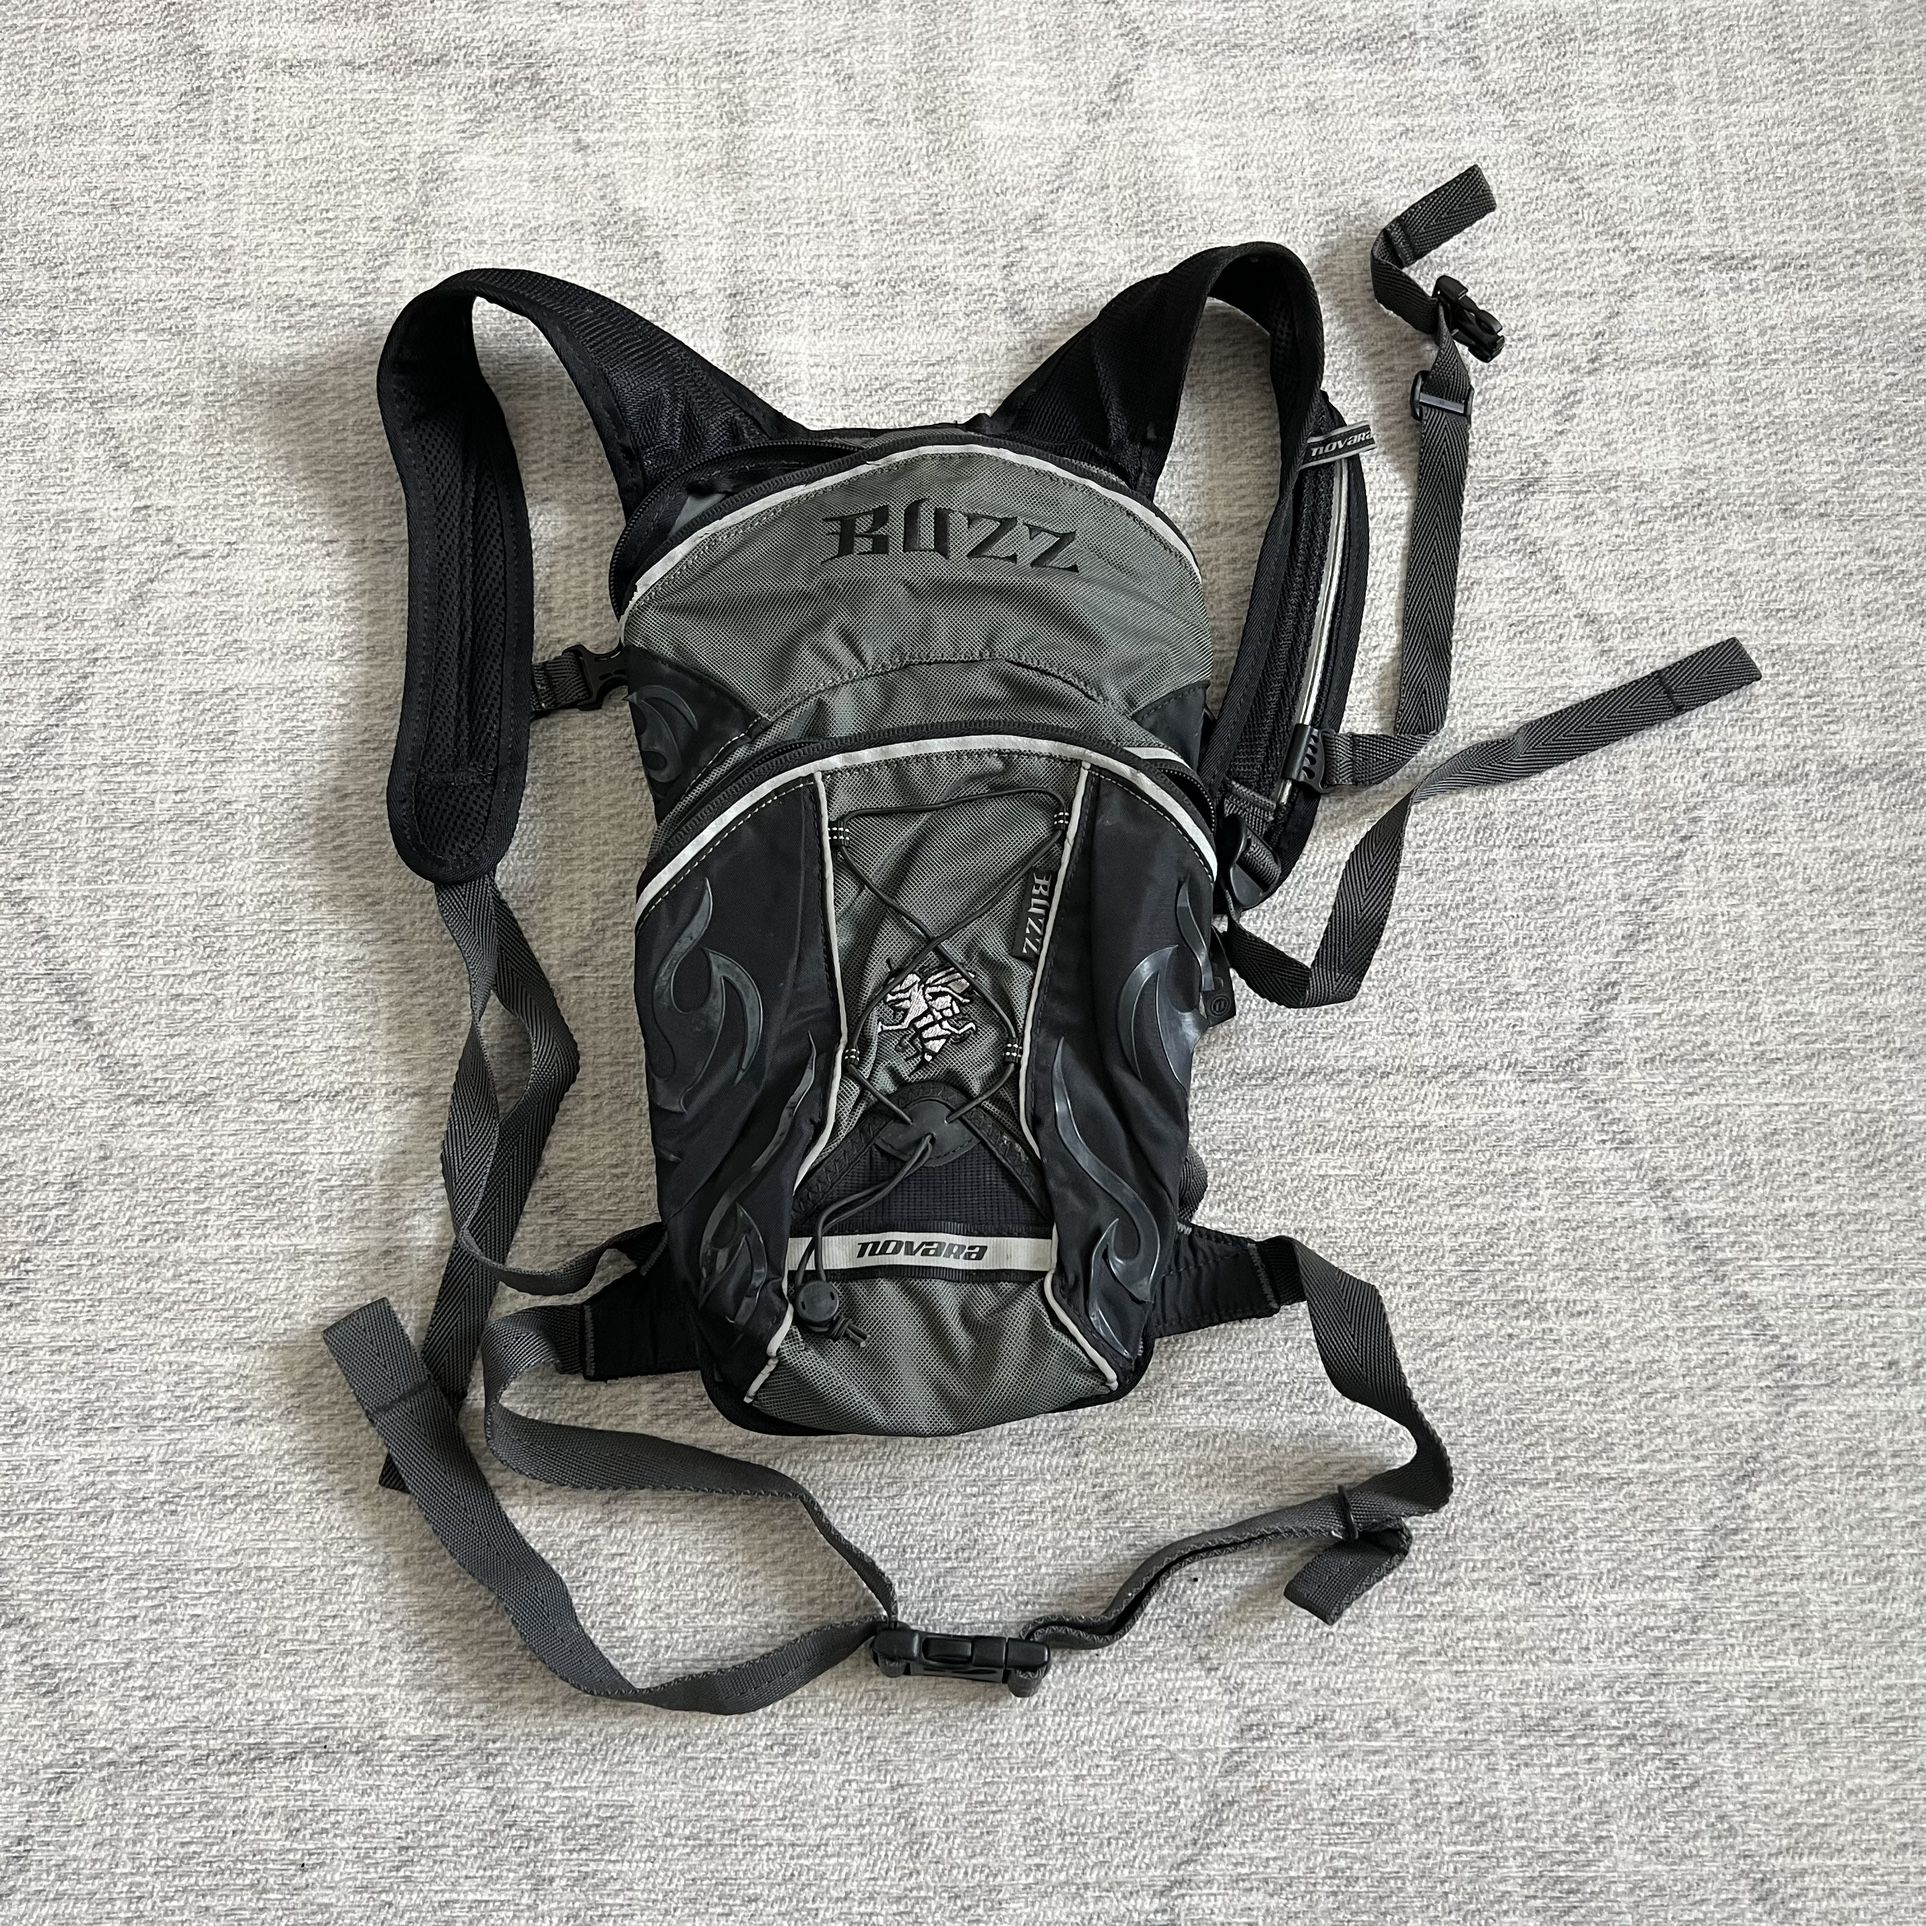 Novara Buzz Black/Grey Athletic Biking Cycling Backpack Hydration Bag